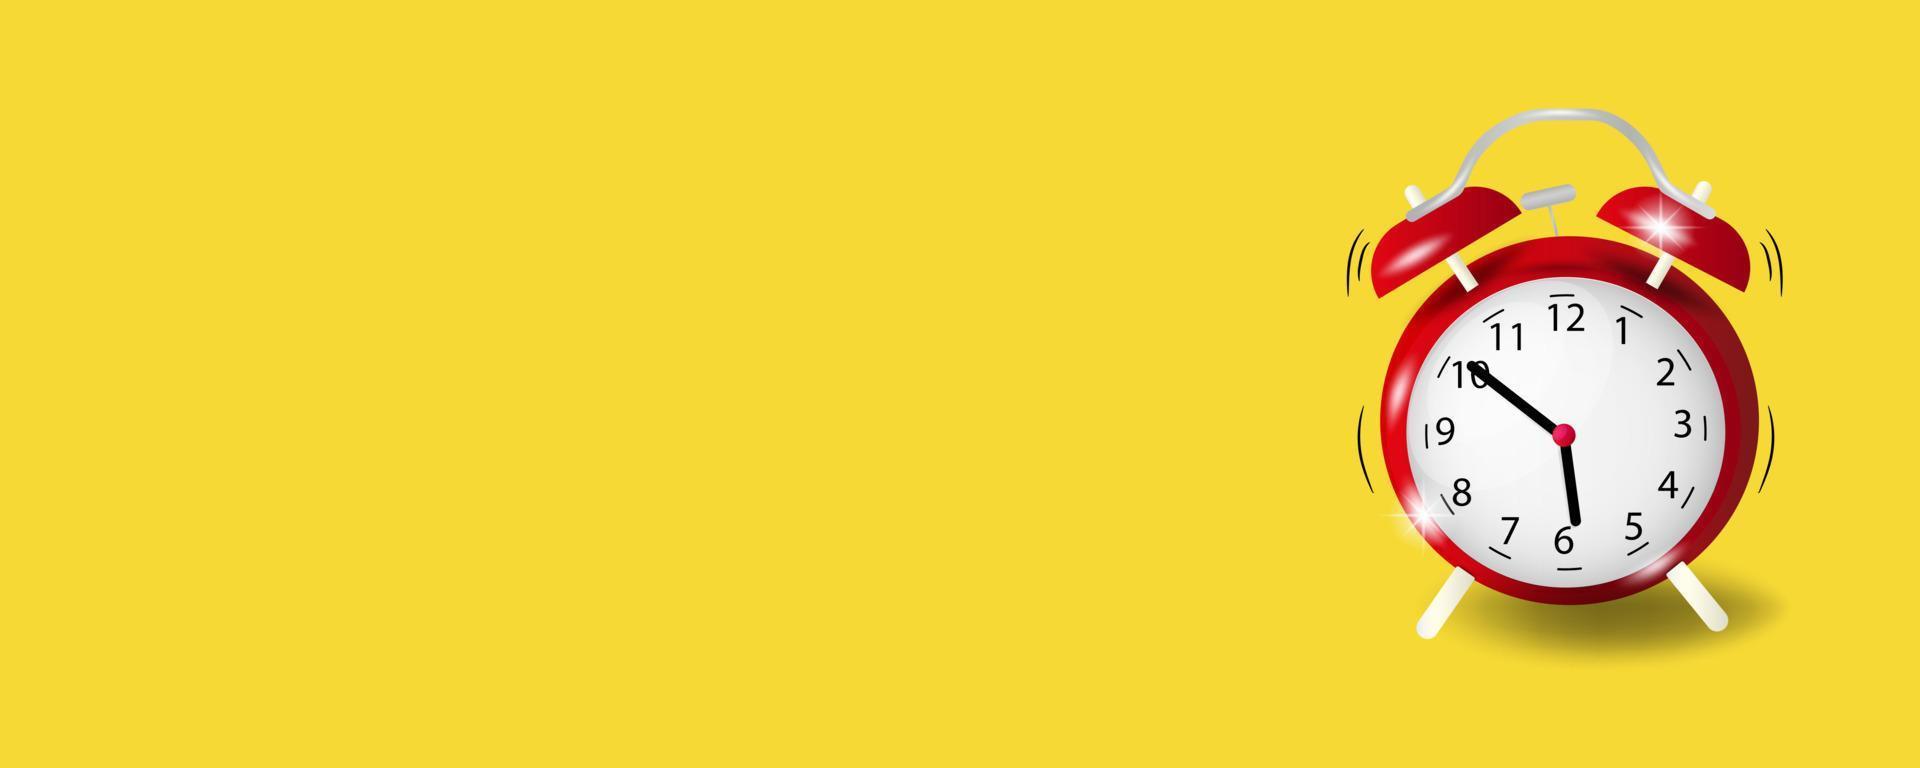 Alarm clock on yellow background vector